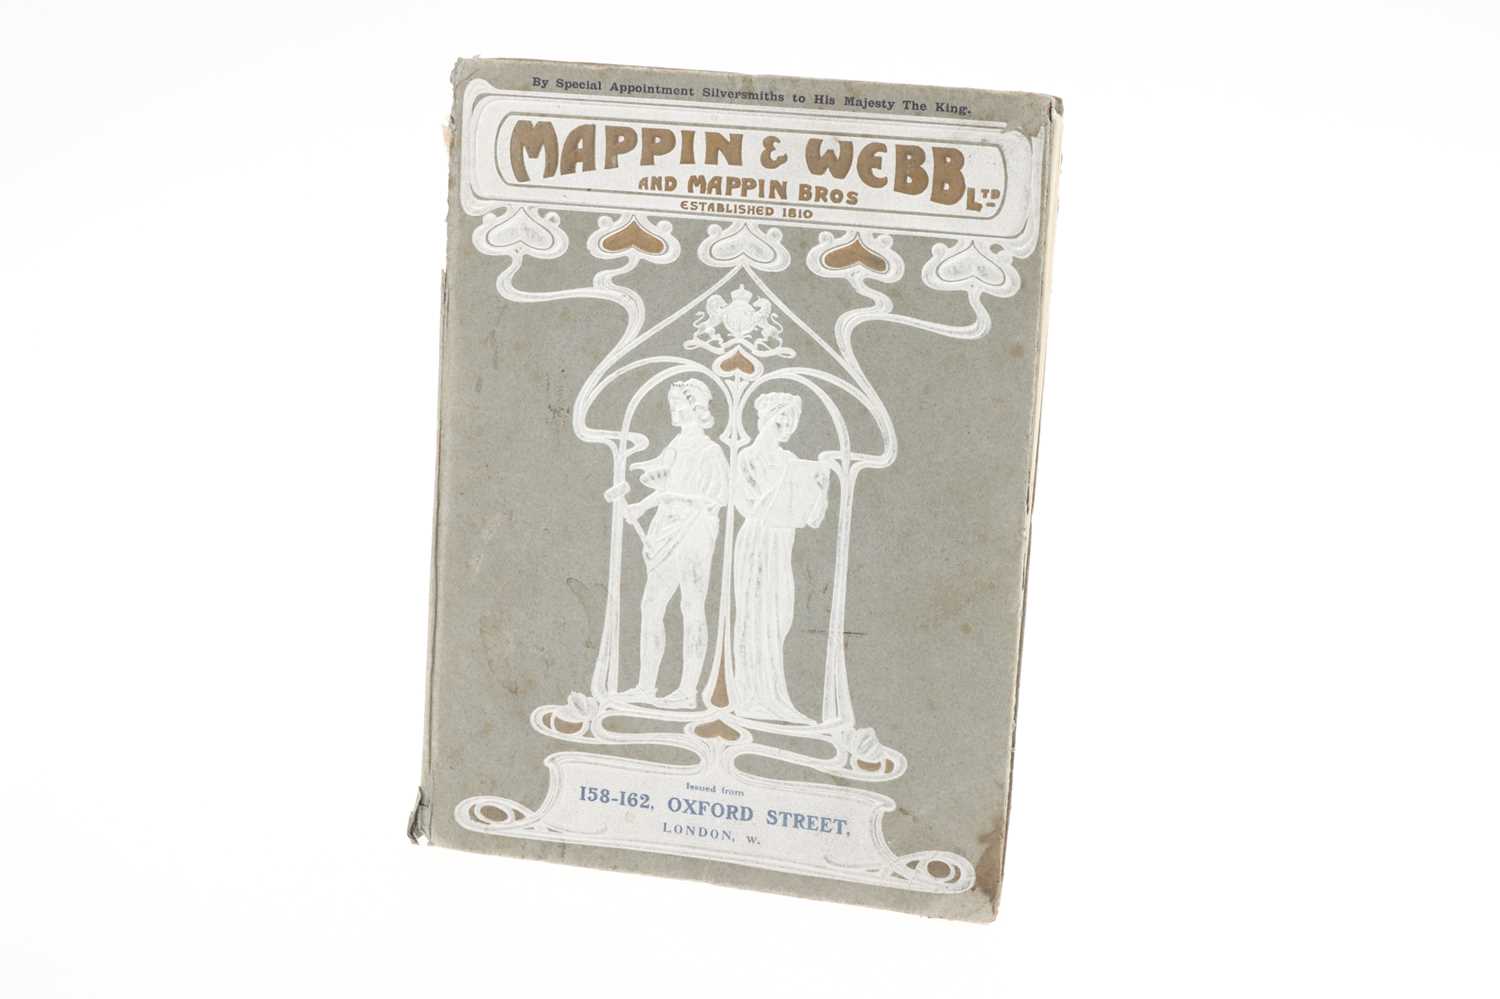 Lot 105 - Mappin & Webb Ltd. and Mappin Bros. Catalogue